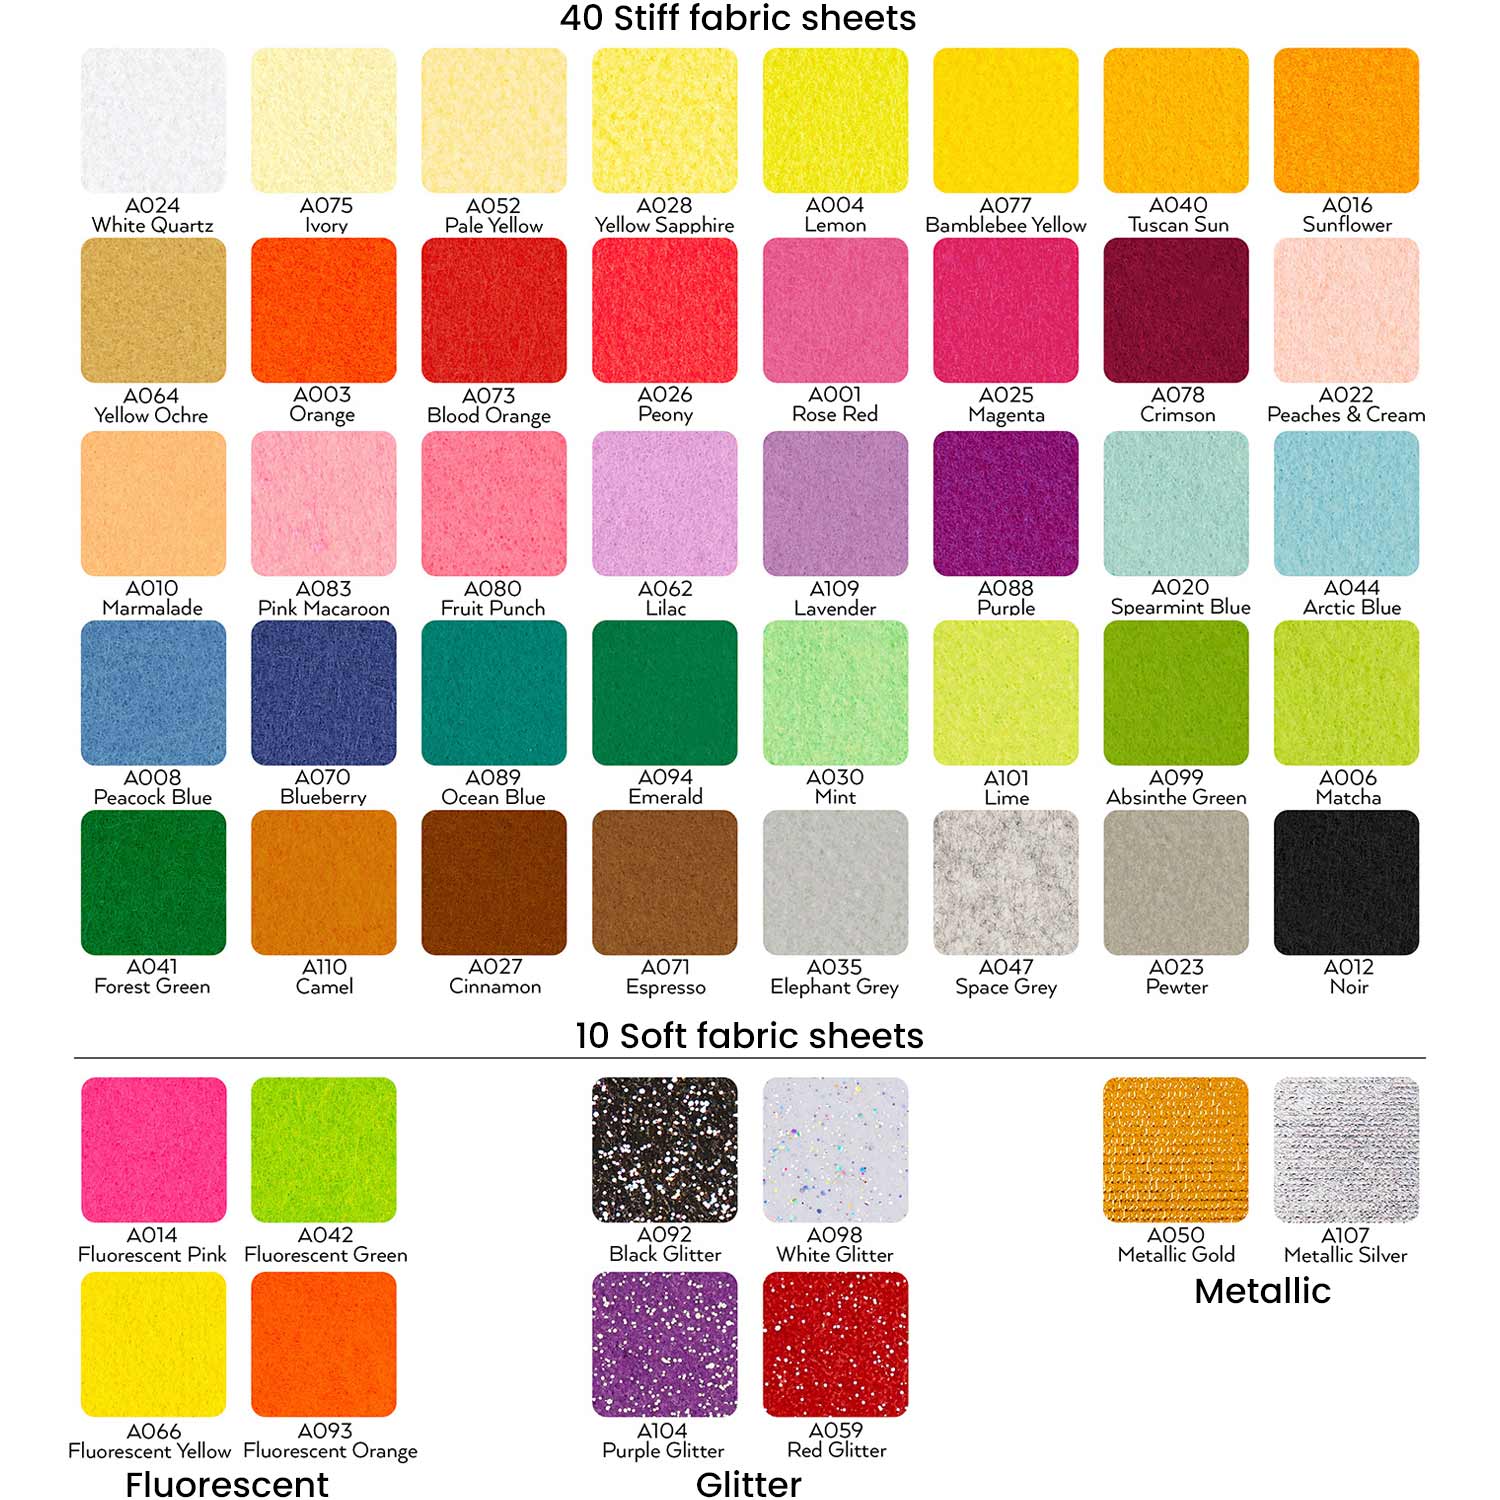 Stiff Felt Fabric, Assorted Colors, 4x6 Sheets - 40 Pack 